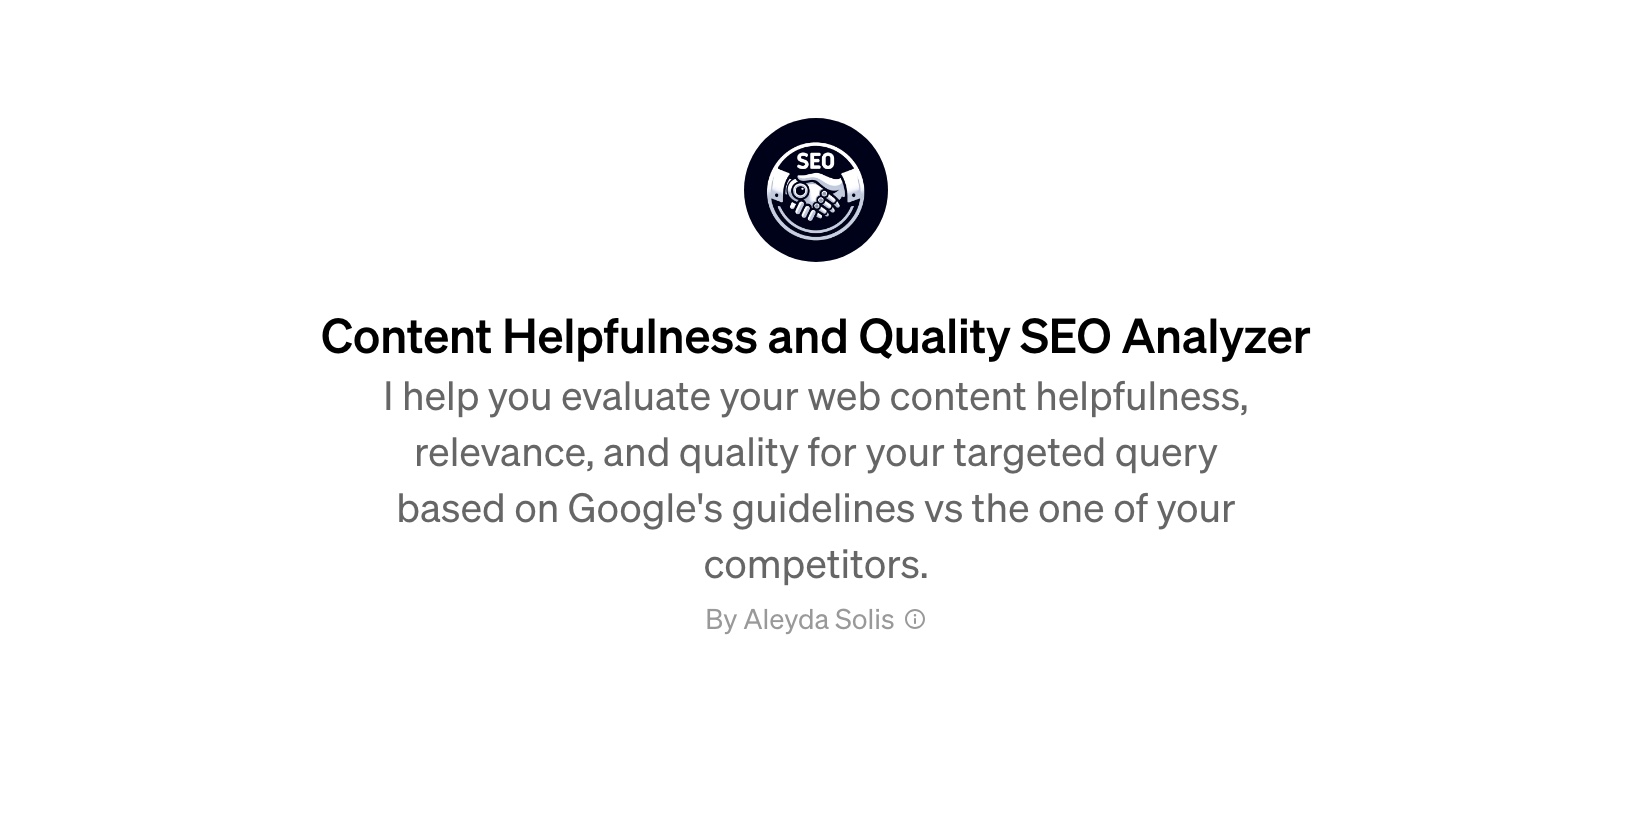 Content Helpfulness and Quality SEO Analyzer